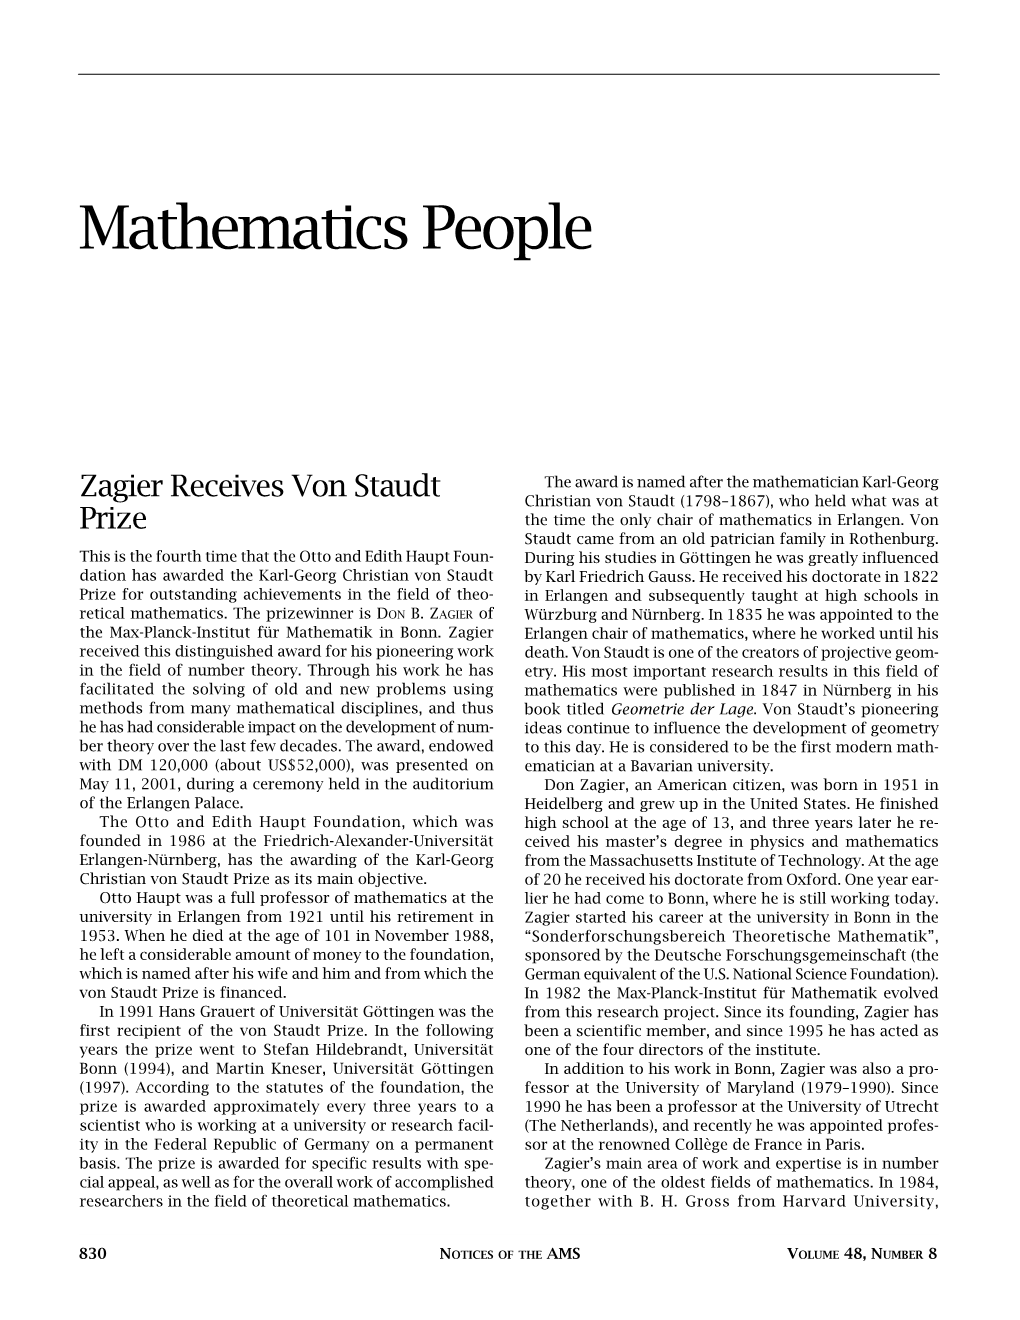 Mathematics People, Volume 48, Number 8